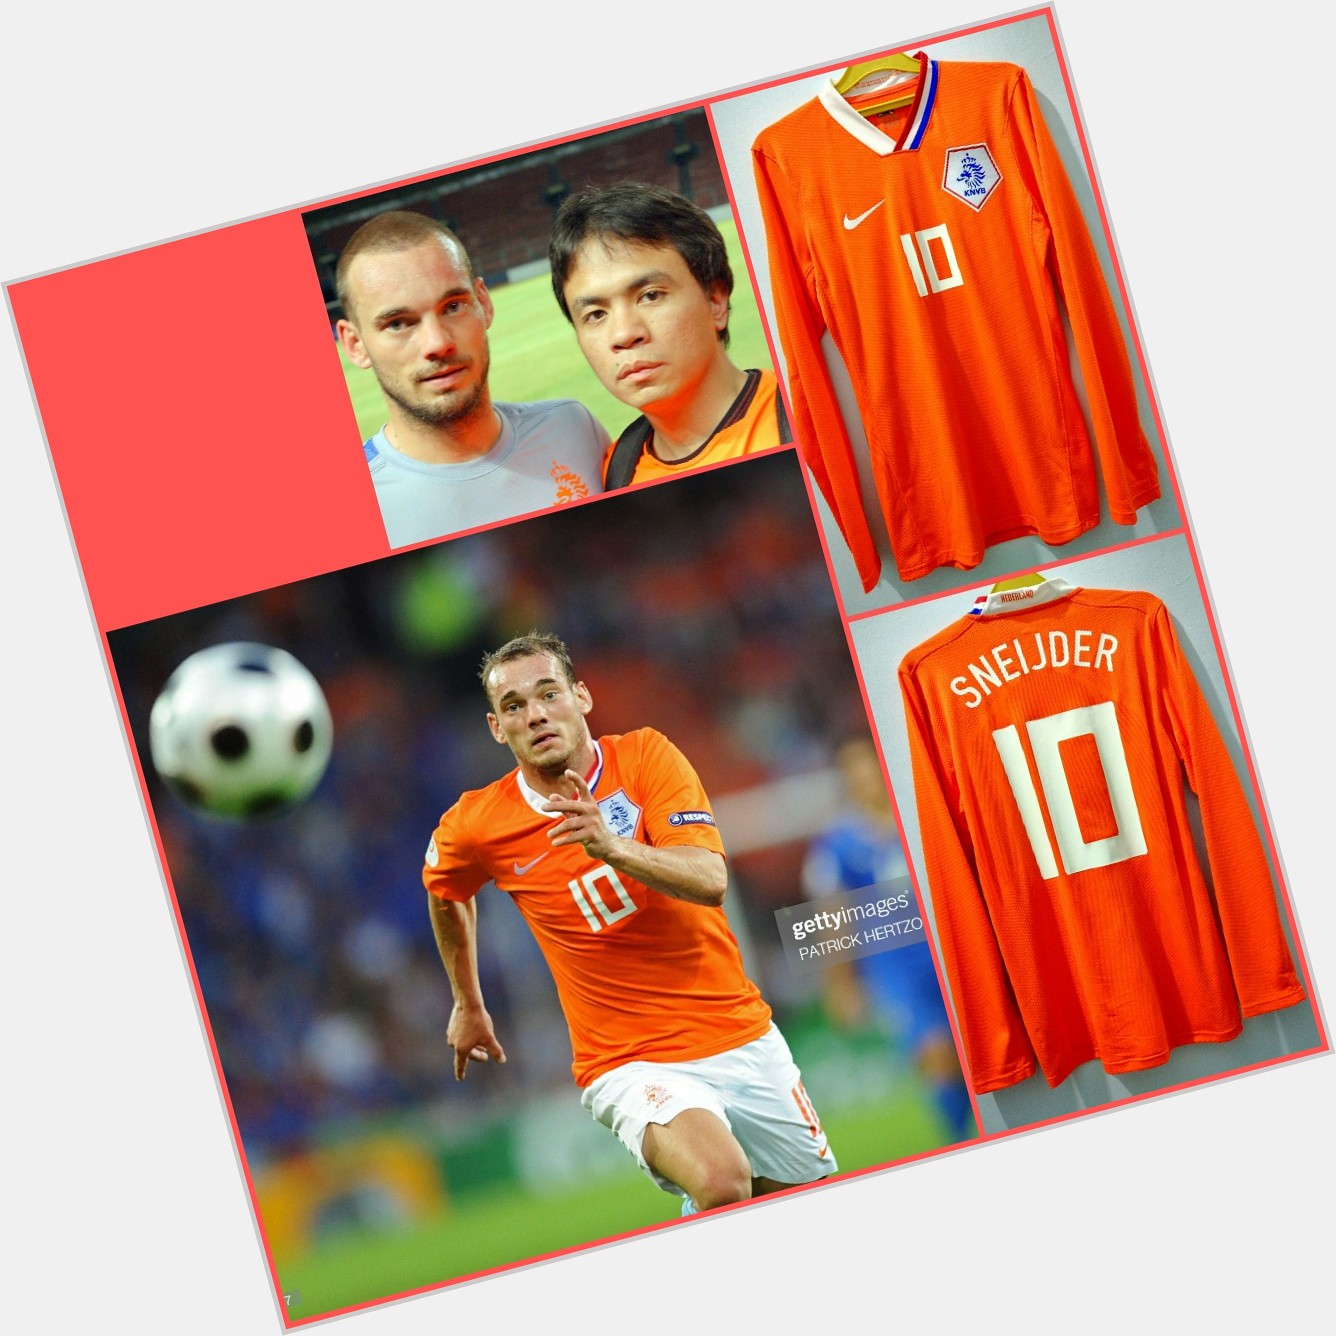   Happy birthday Wesley Sneijder! 